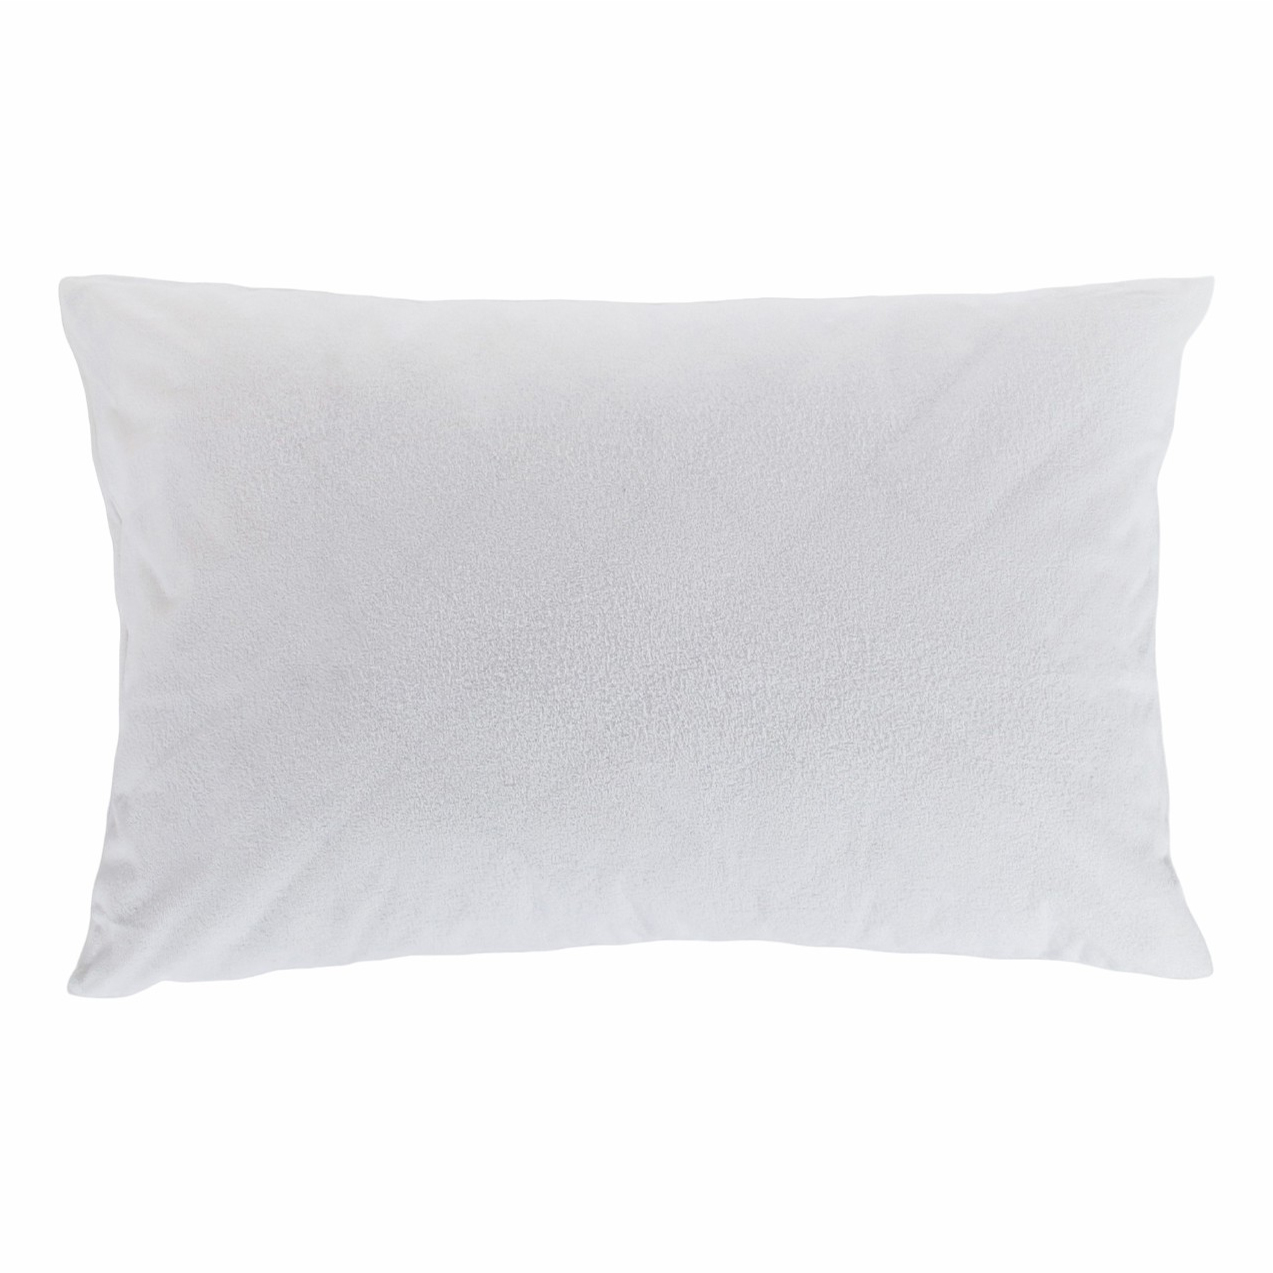 фото Чехол на подушку candidopenalba хлопок-полиэстер 50x70 см белый